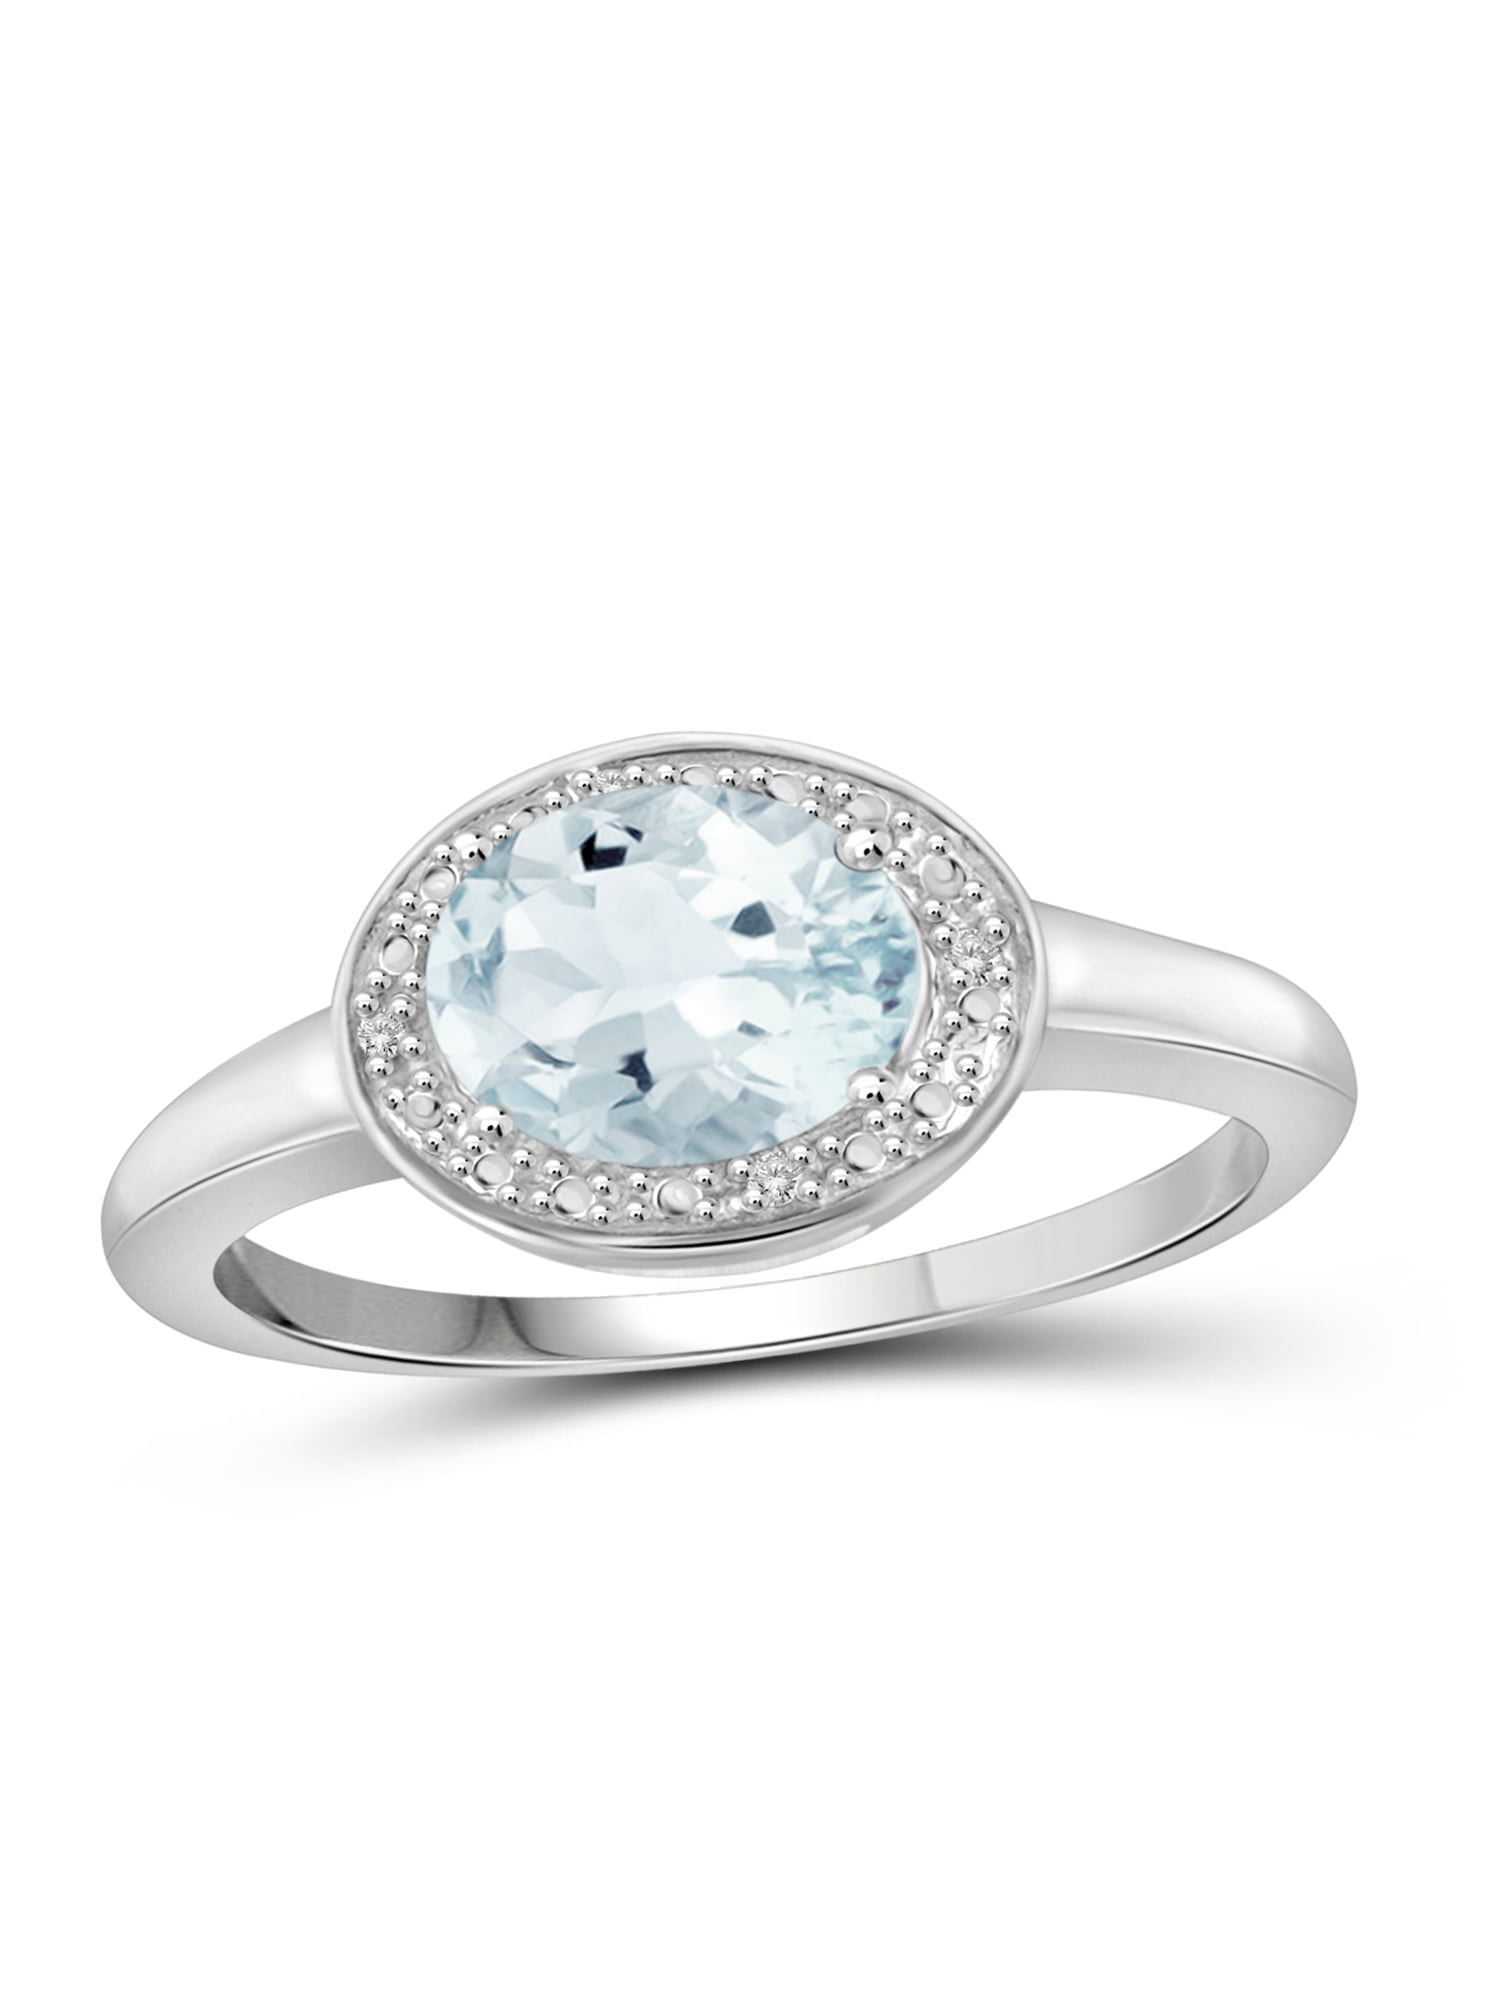 JewelersClub Aquamarine Ring Birthstone Jewelry 1 15 Carat 0 925 Sterling Silver White Diamond Accent Gemstone Rings Hypoallergenic Band 3f1ff740 eba5 472e 8cf3 85b3f46104fc 1.c3d8f2bbd4e2e0f6dfdc6f182ba6007e